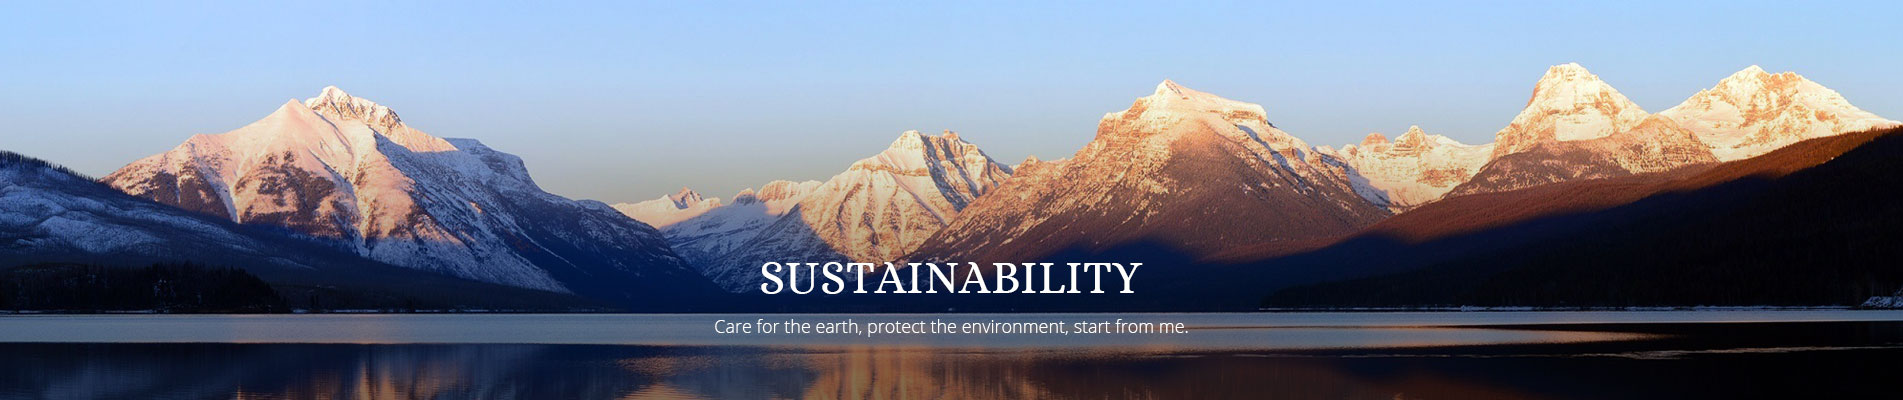 sustainability banner